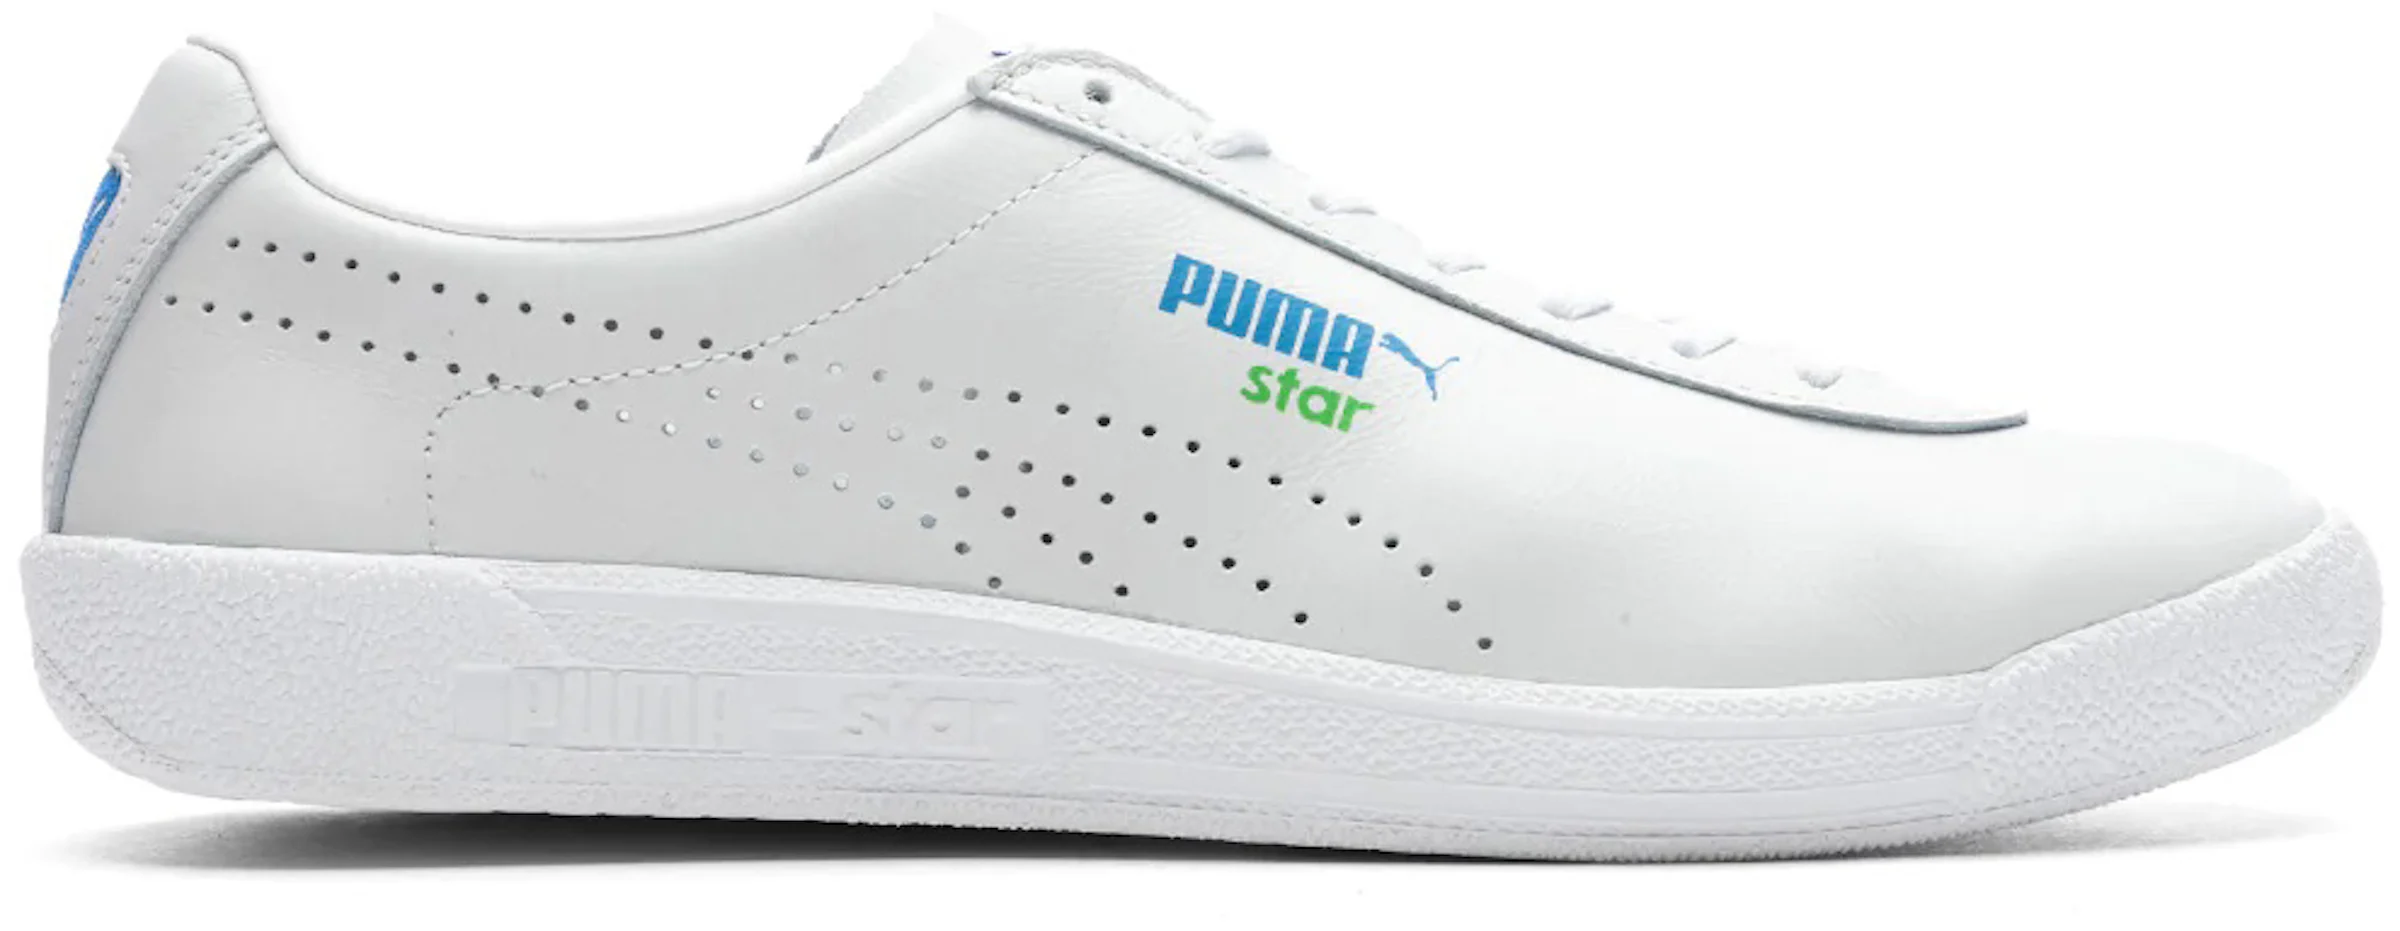 Puma Star Tennis Whites Men's - 393197-01 - US